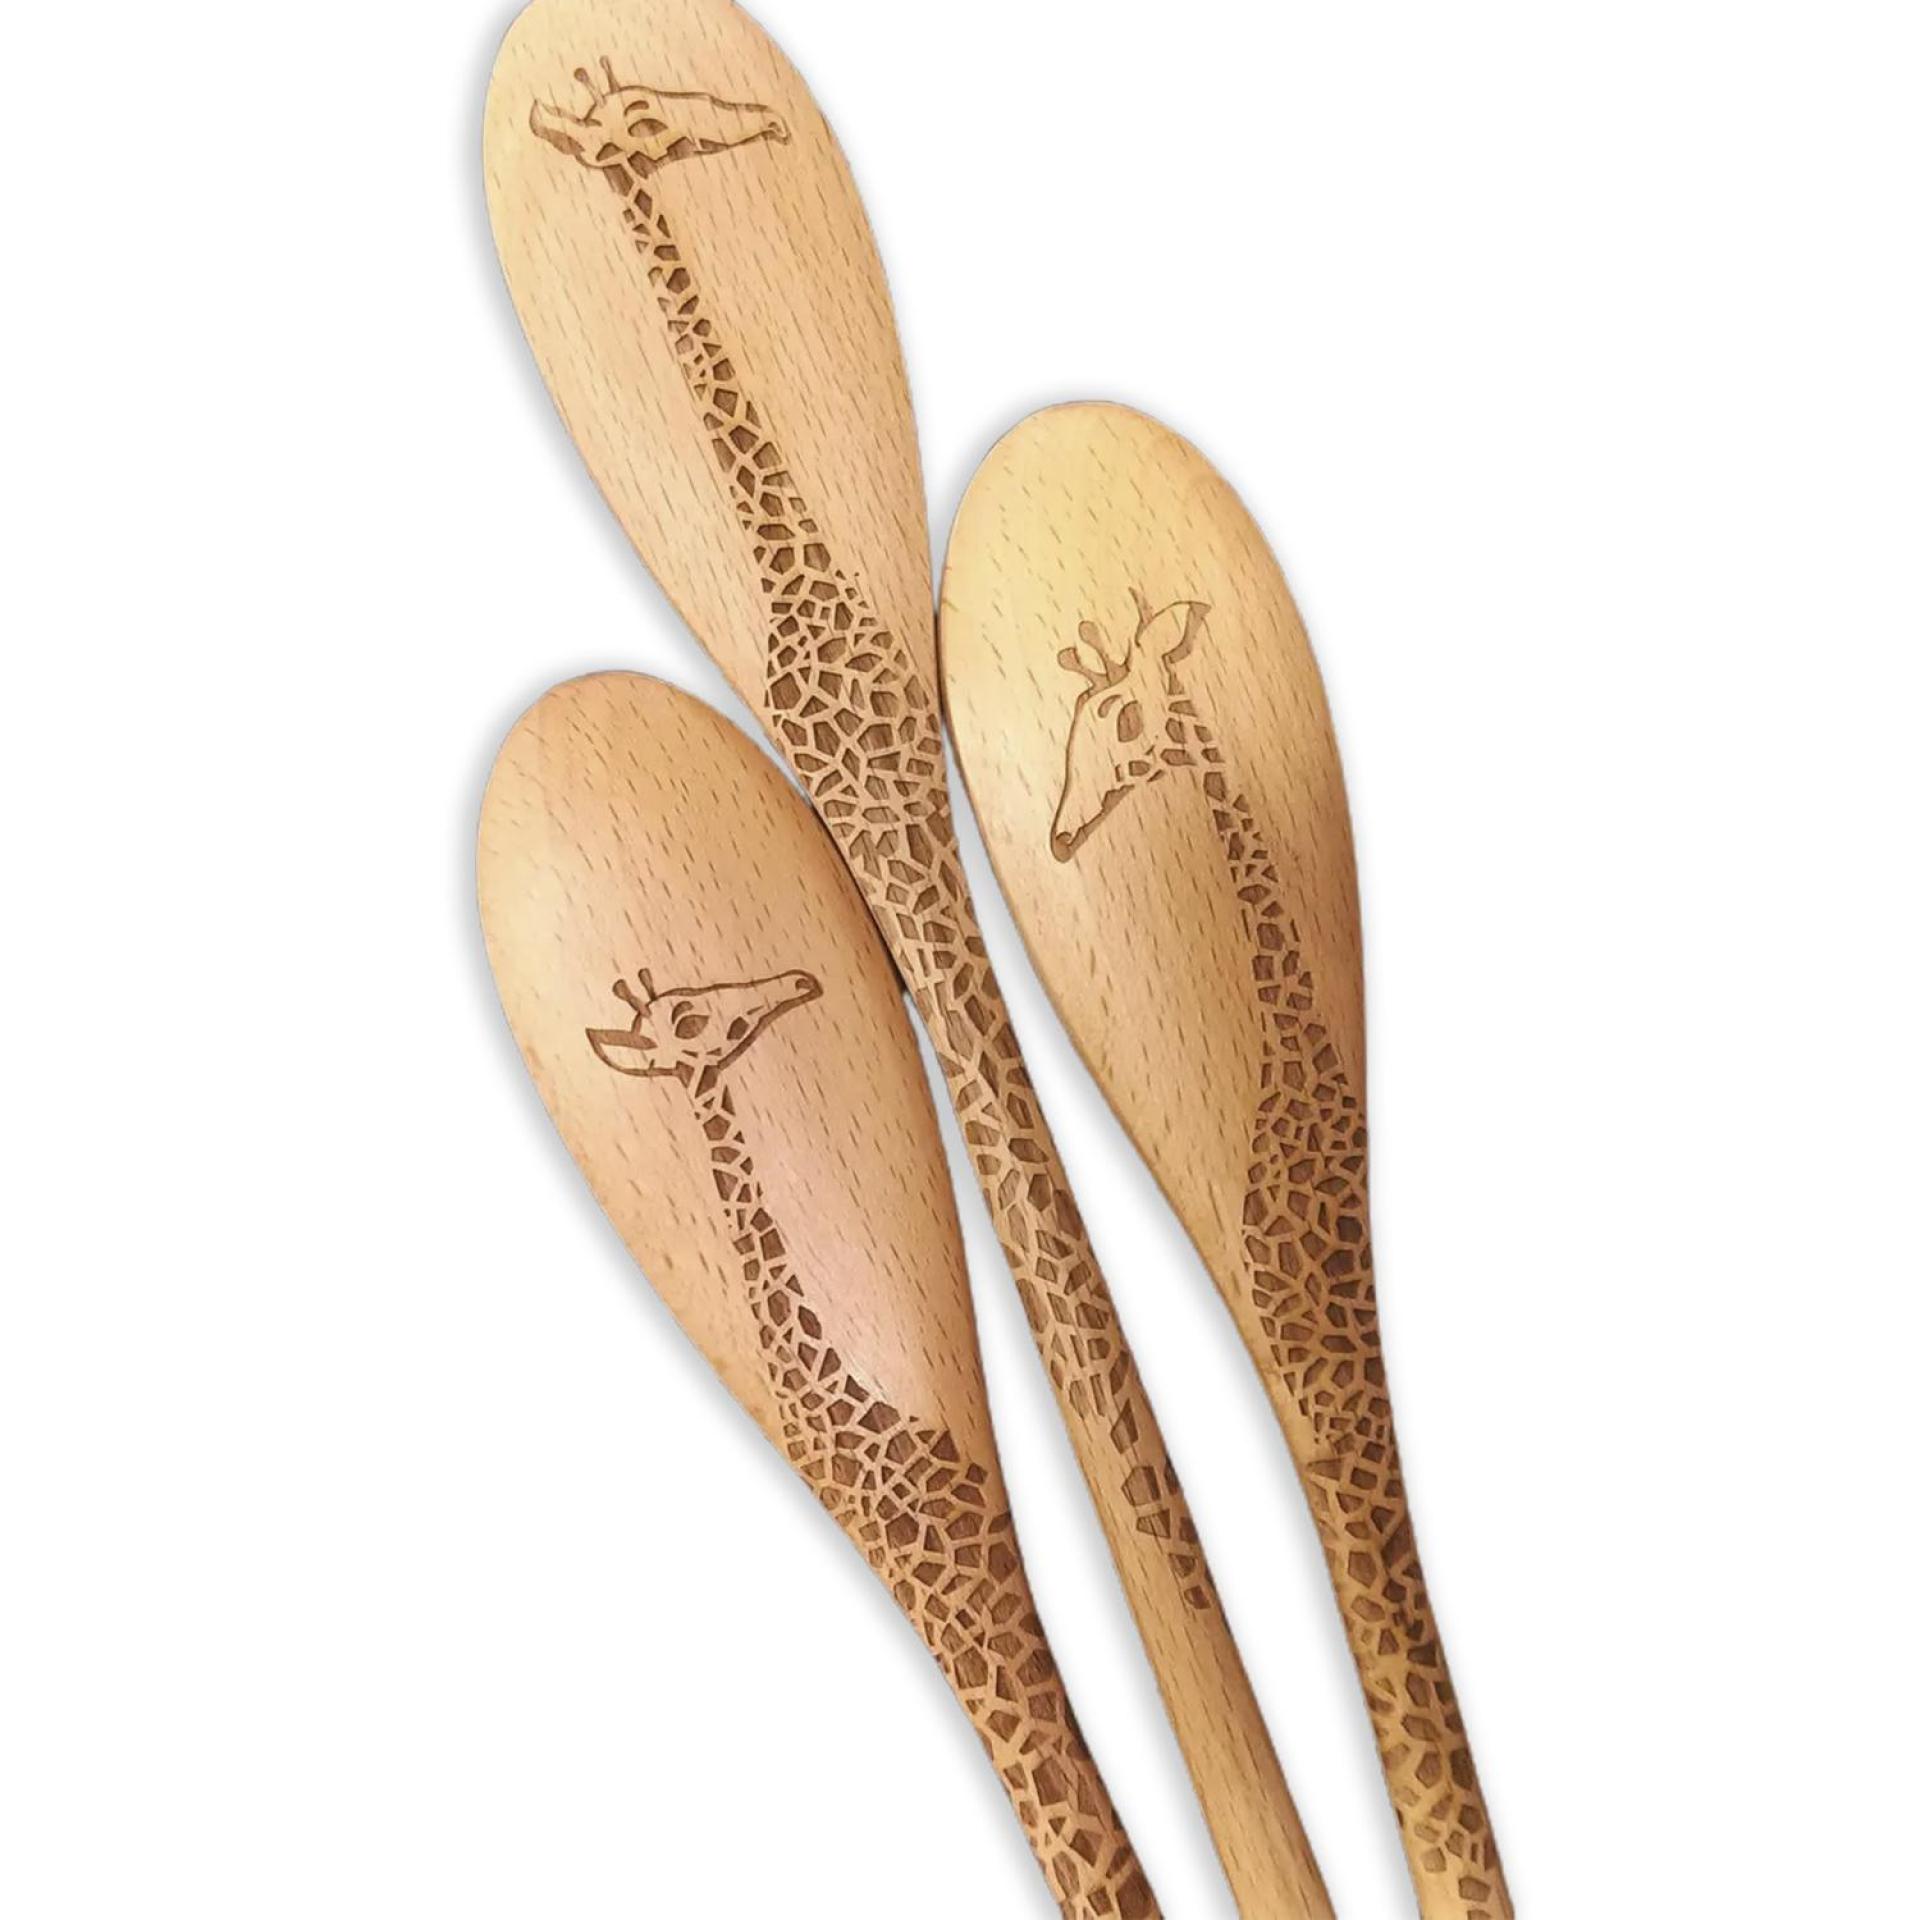 Engraved Wooden Spoons, Giraffes Spoons, Giraffes - Engraved Wooden Spoons